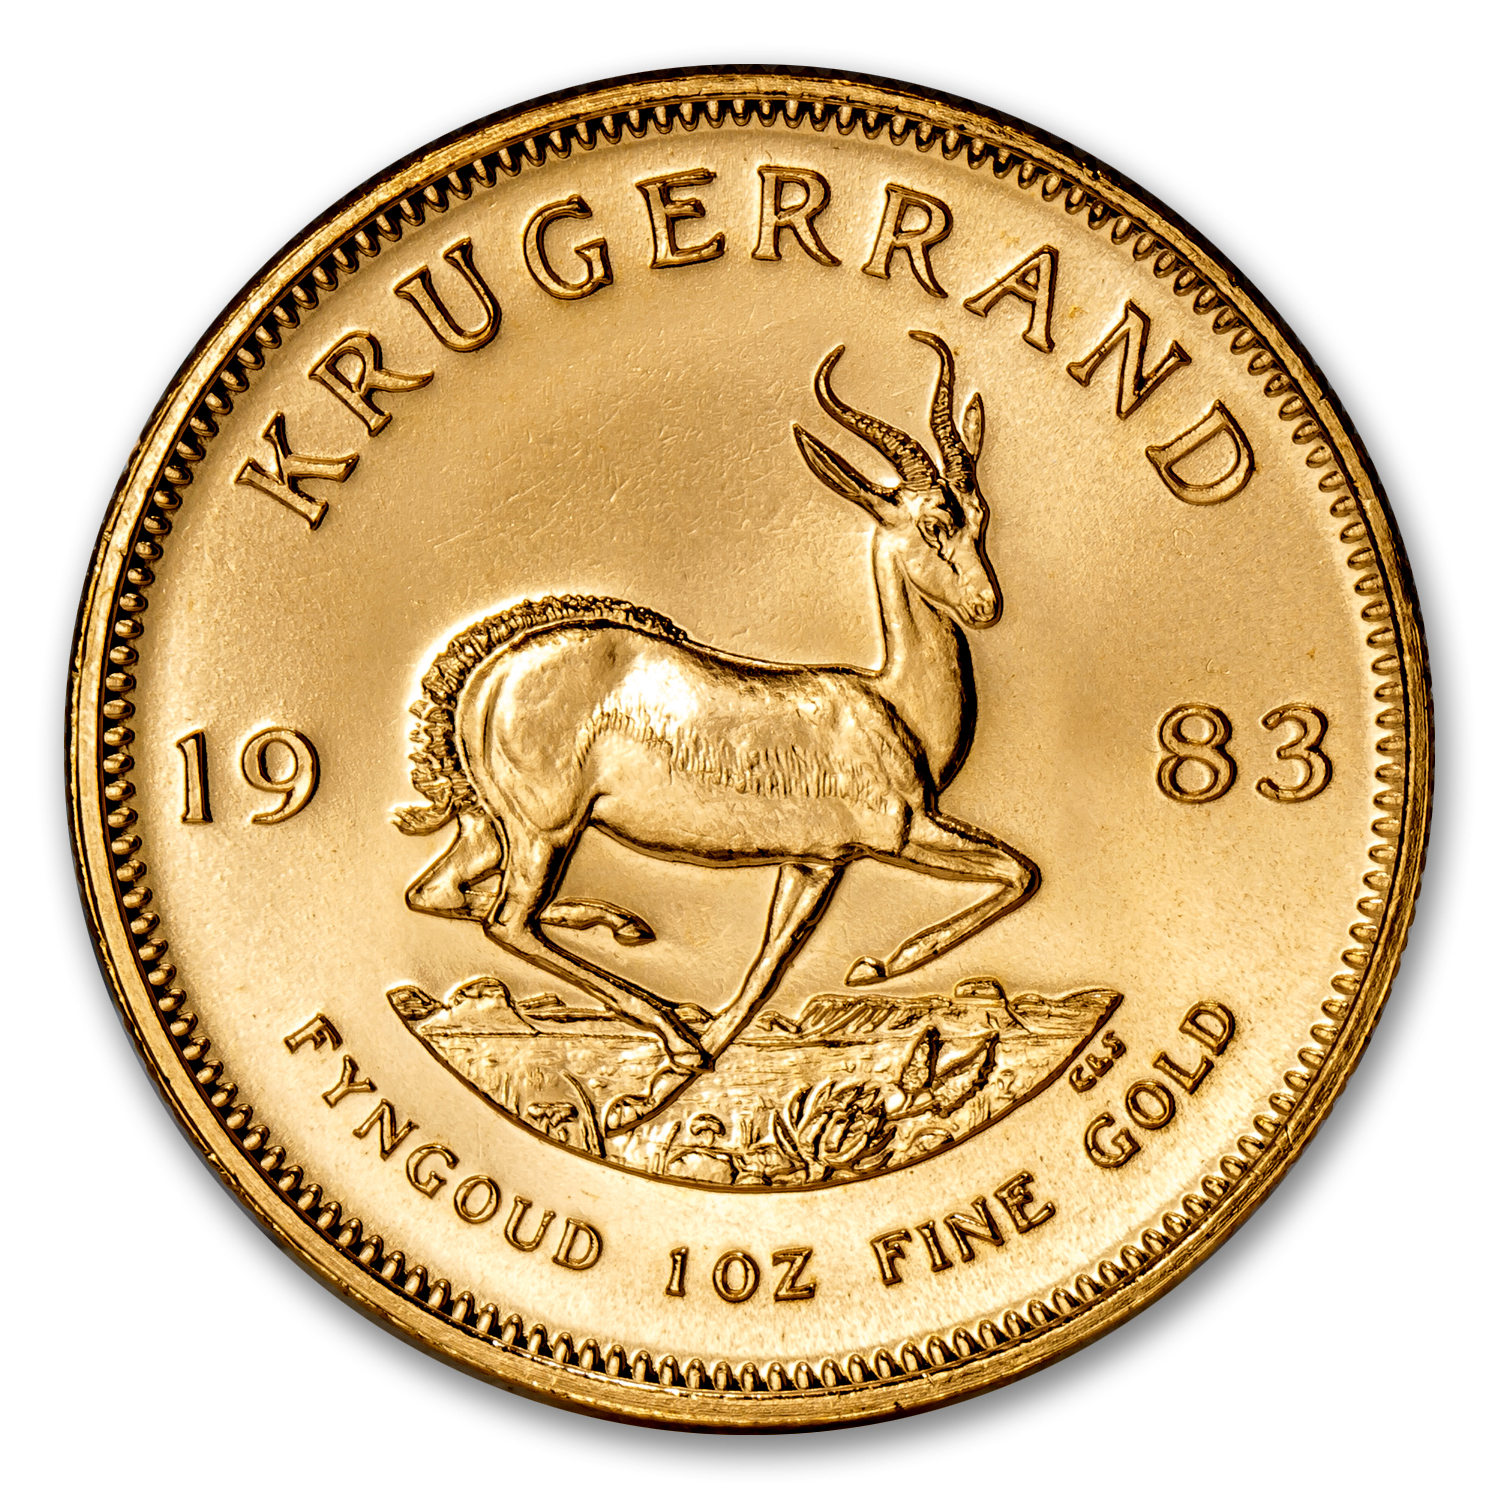 Buy 1983 South Africa 1 oz Gold Krugerrand BU - Click Image to Close